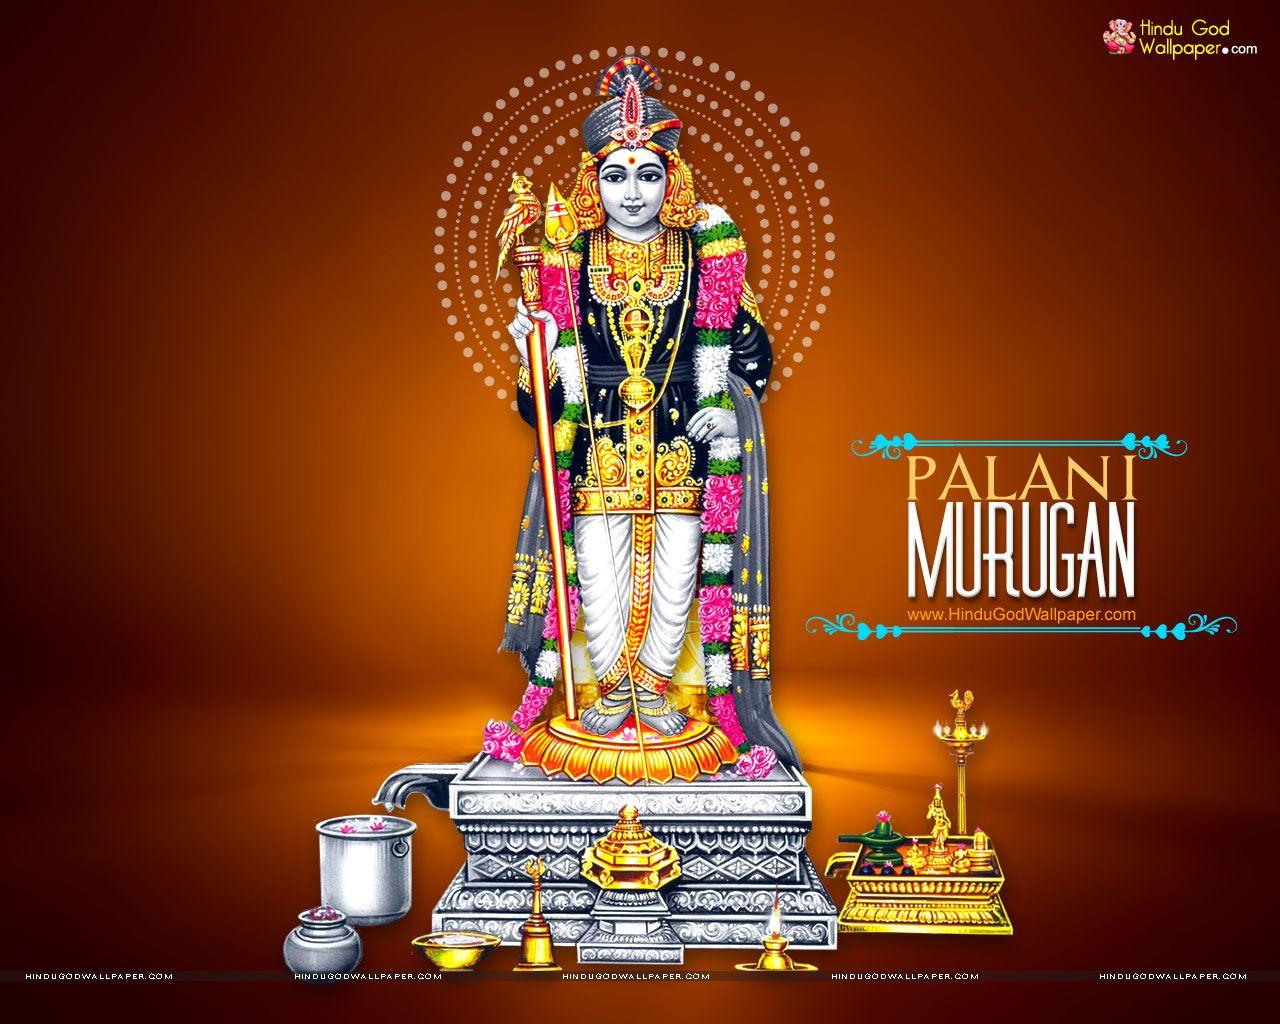 Palani Murugan Wallpaper & Photo Free Download. Lord murugan